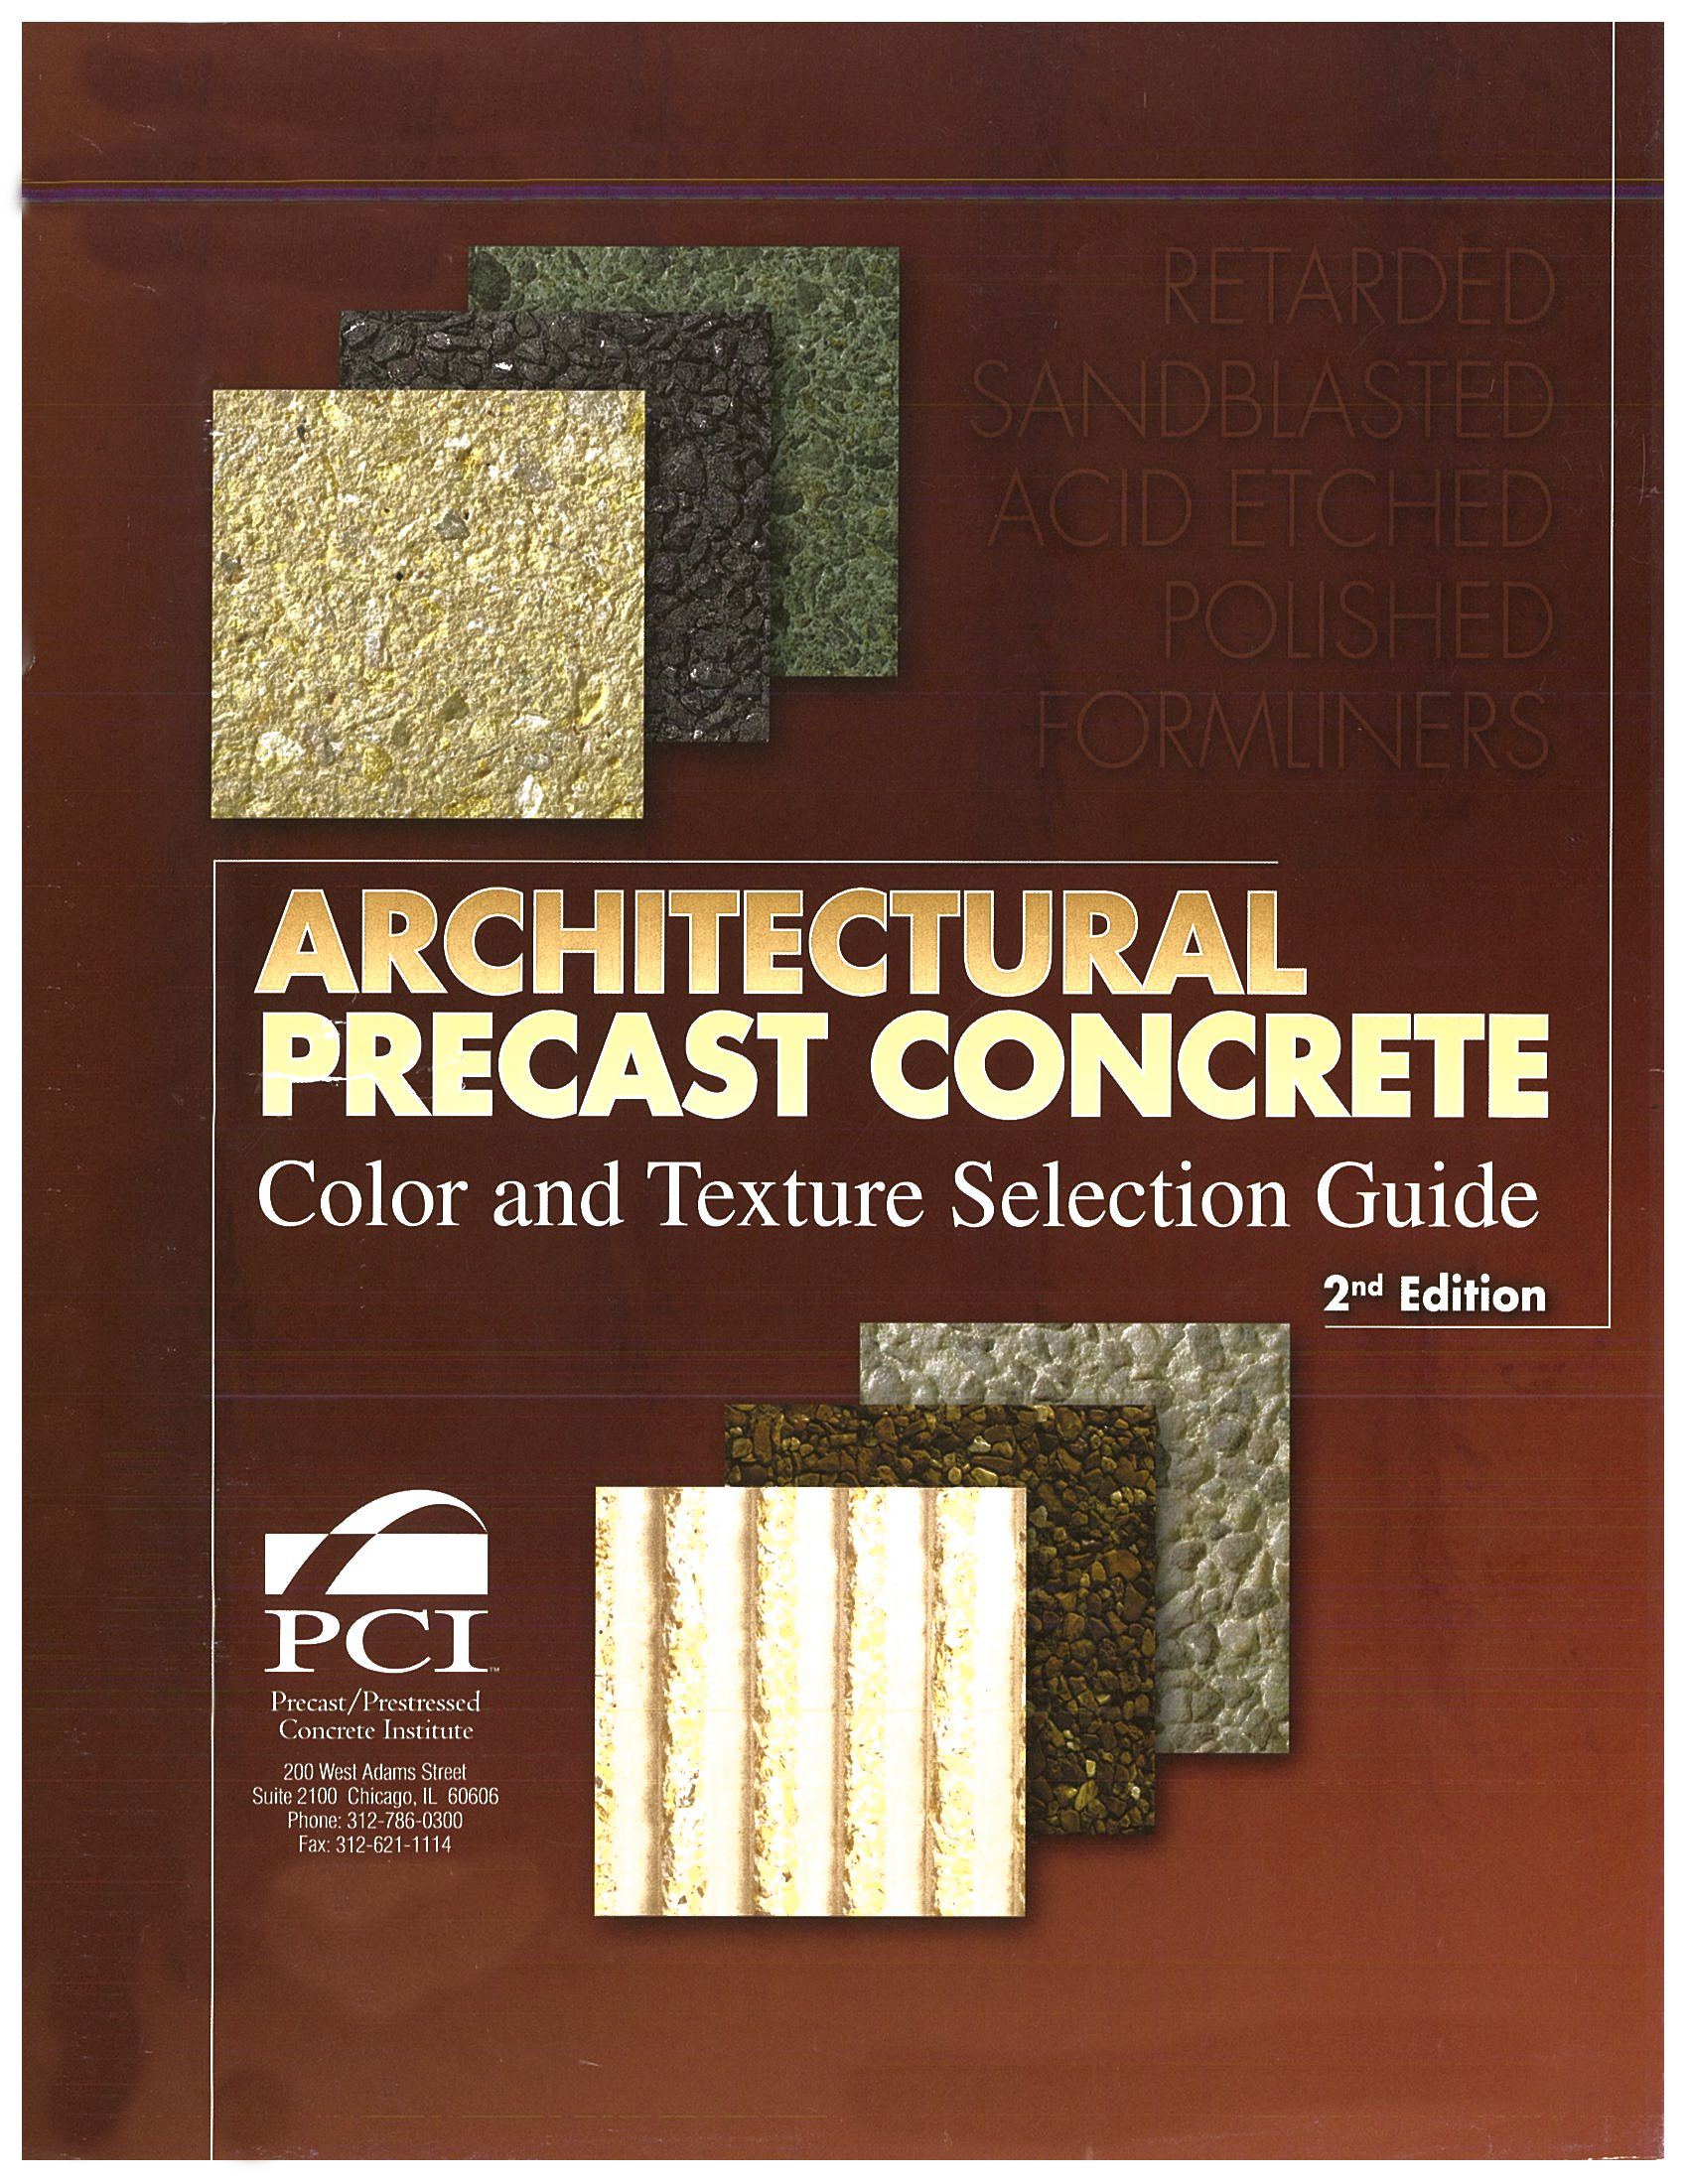 Architectural Precast Concrete Color and Texture Guide, 2nd Edition